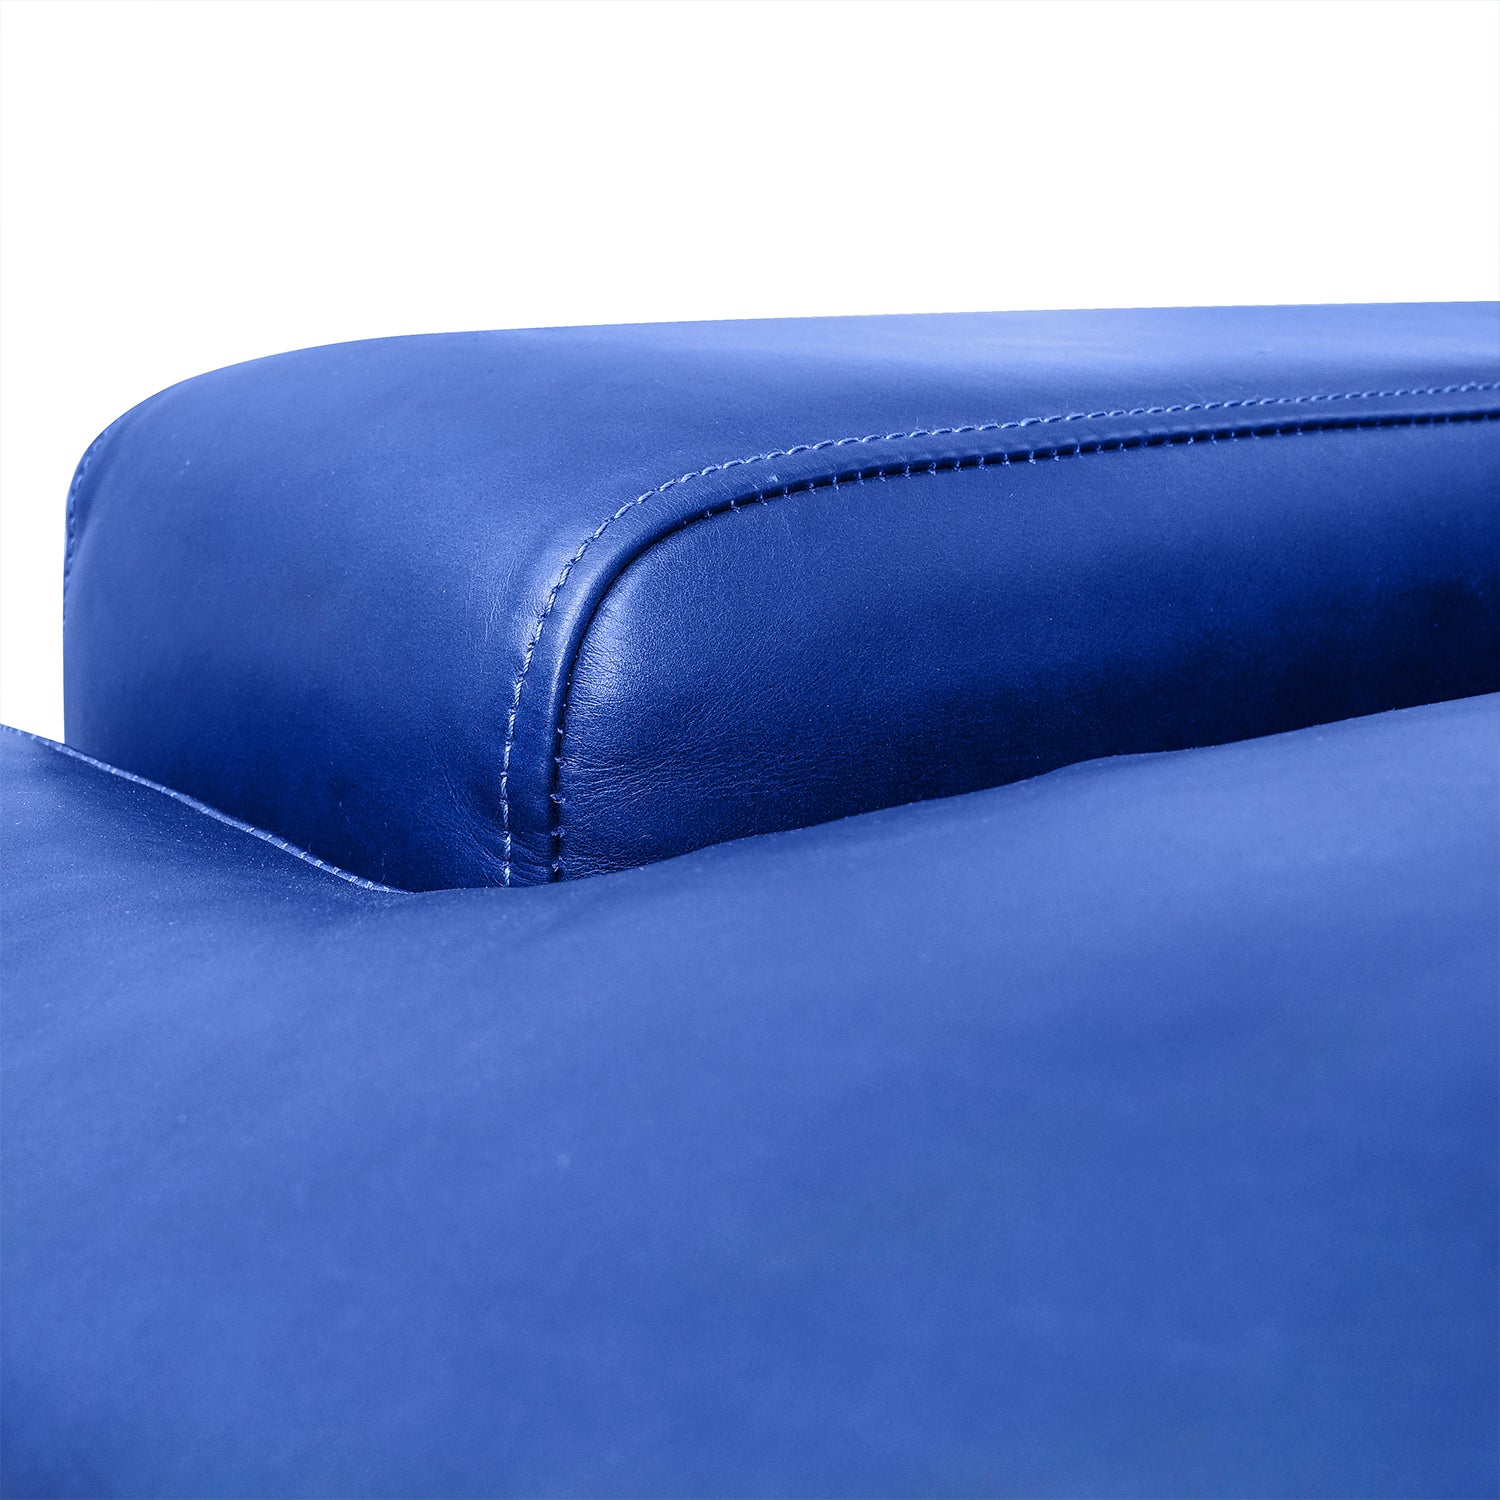 Marcel Pull Up Leather Sofa Azure Close Up Back Cushion